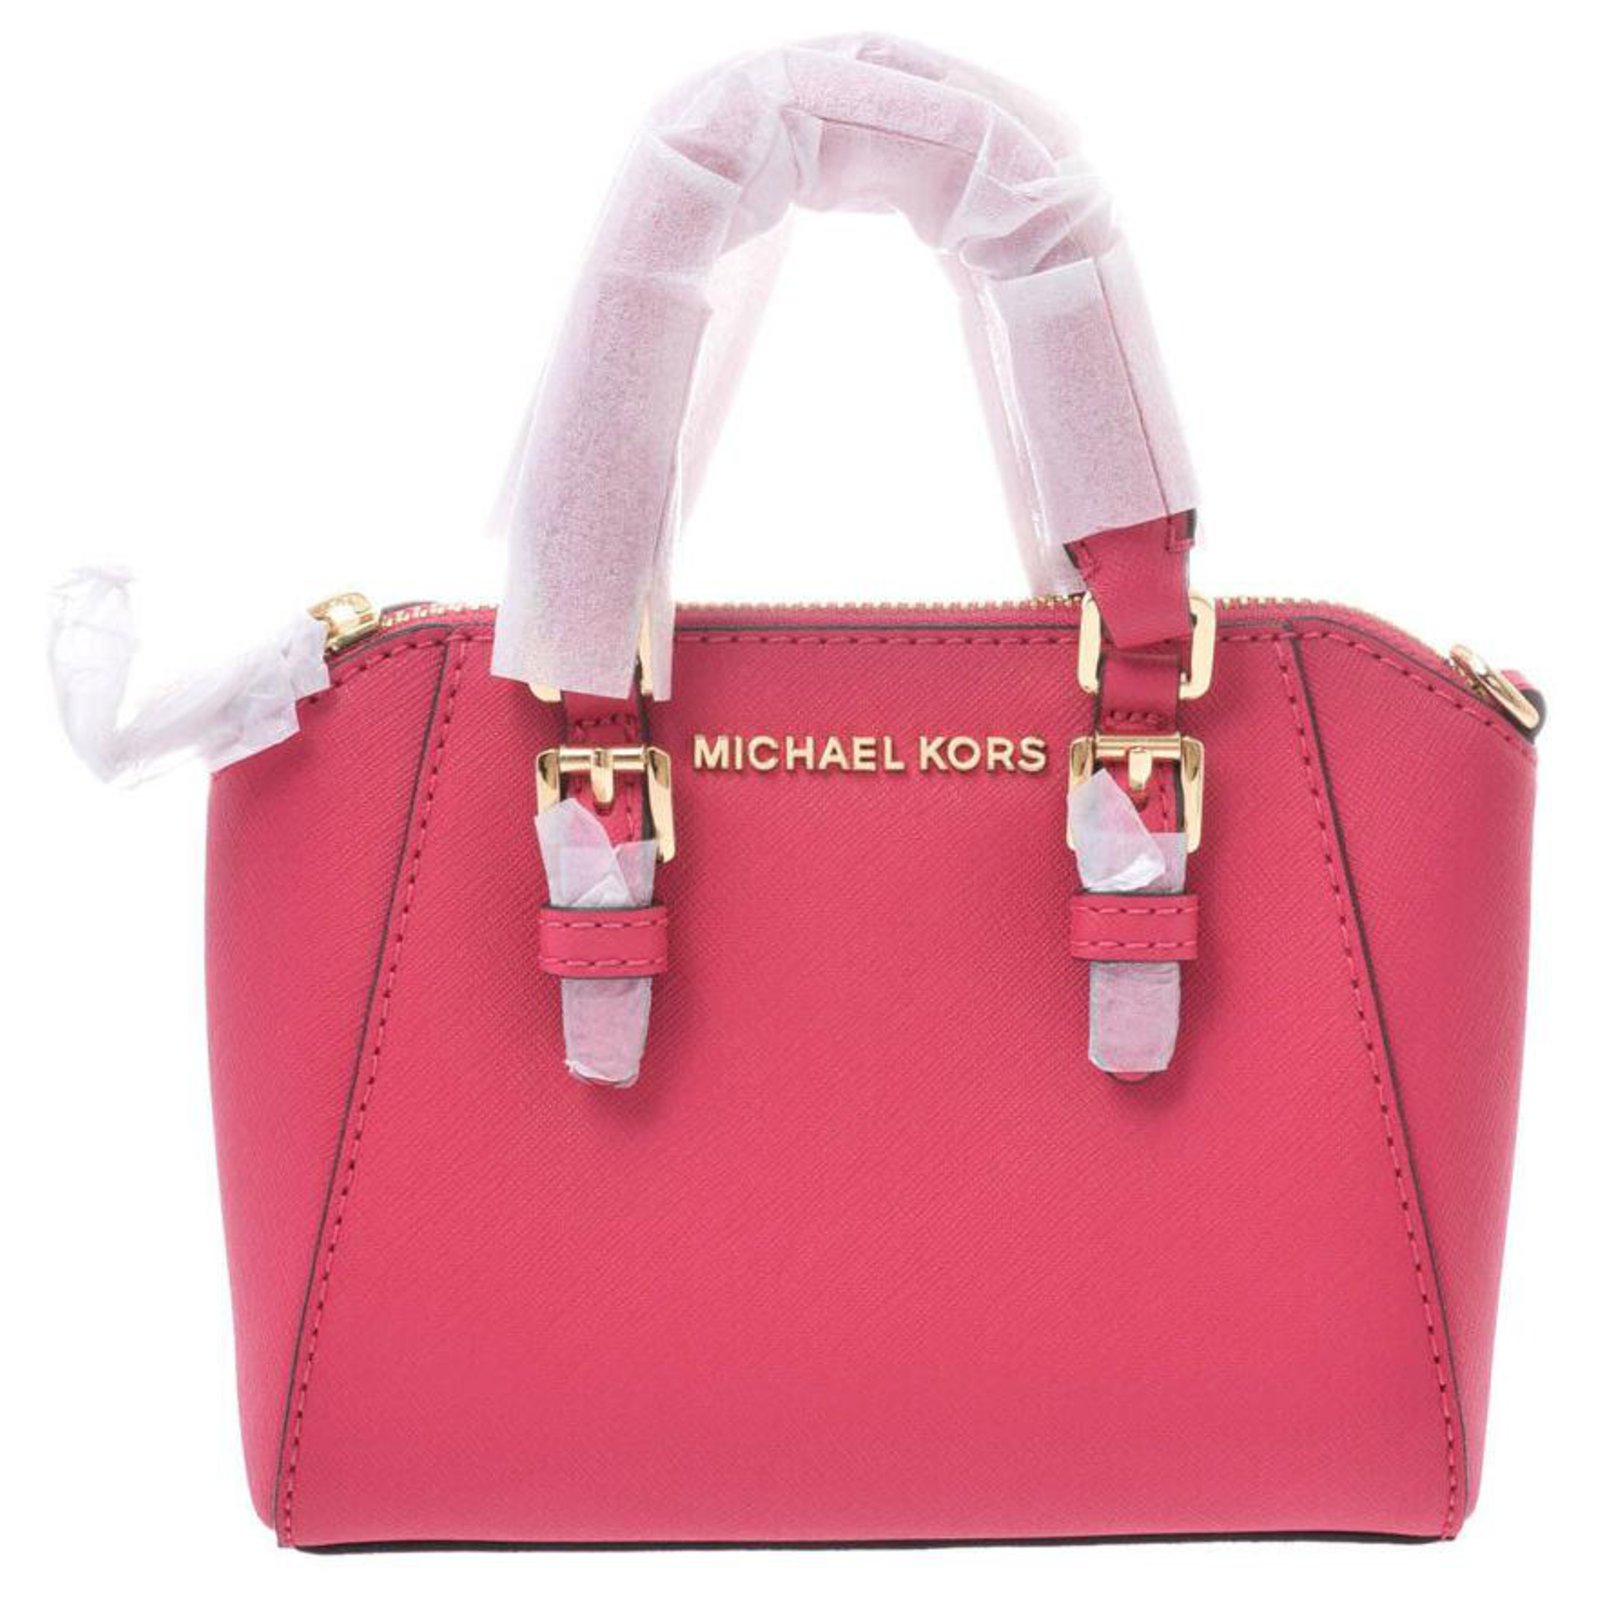 handbag brands michael kors